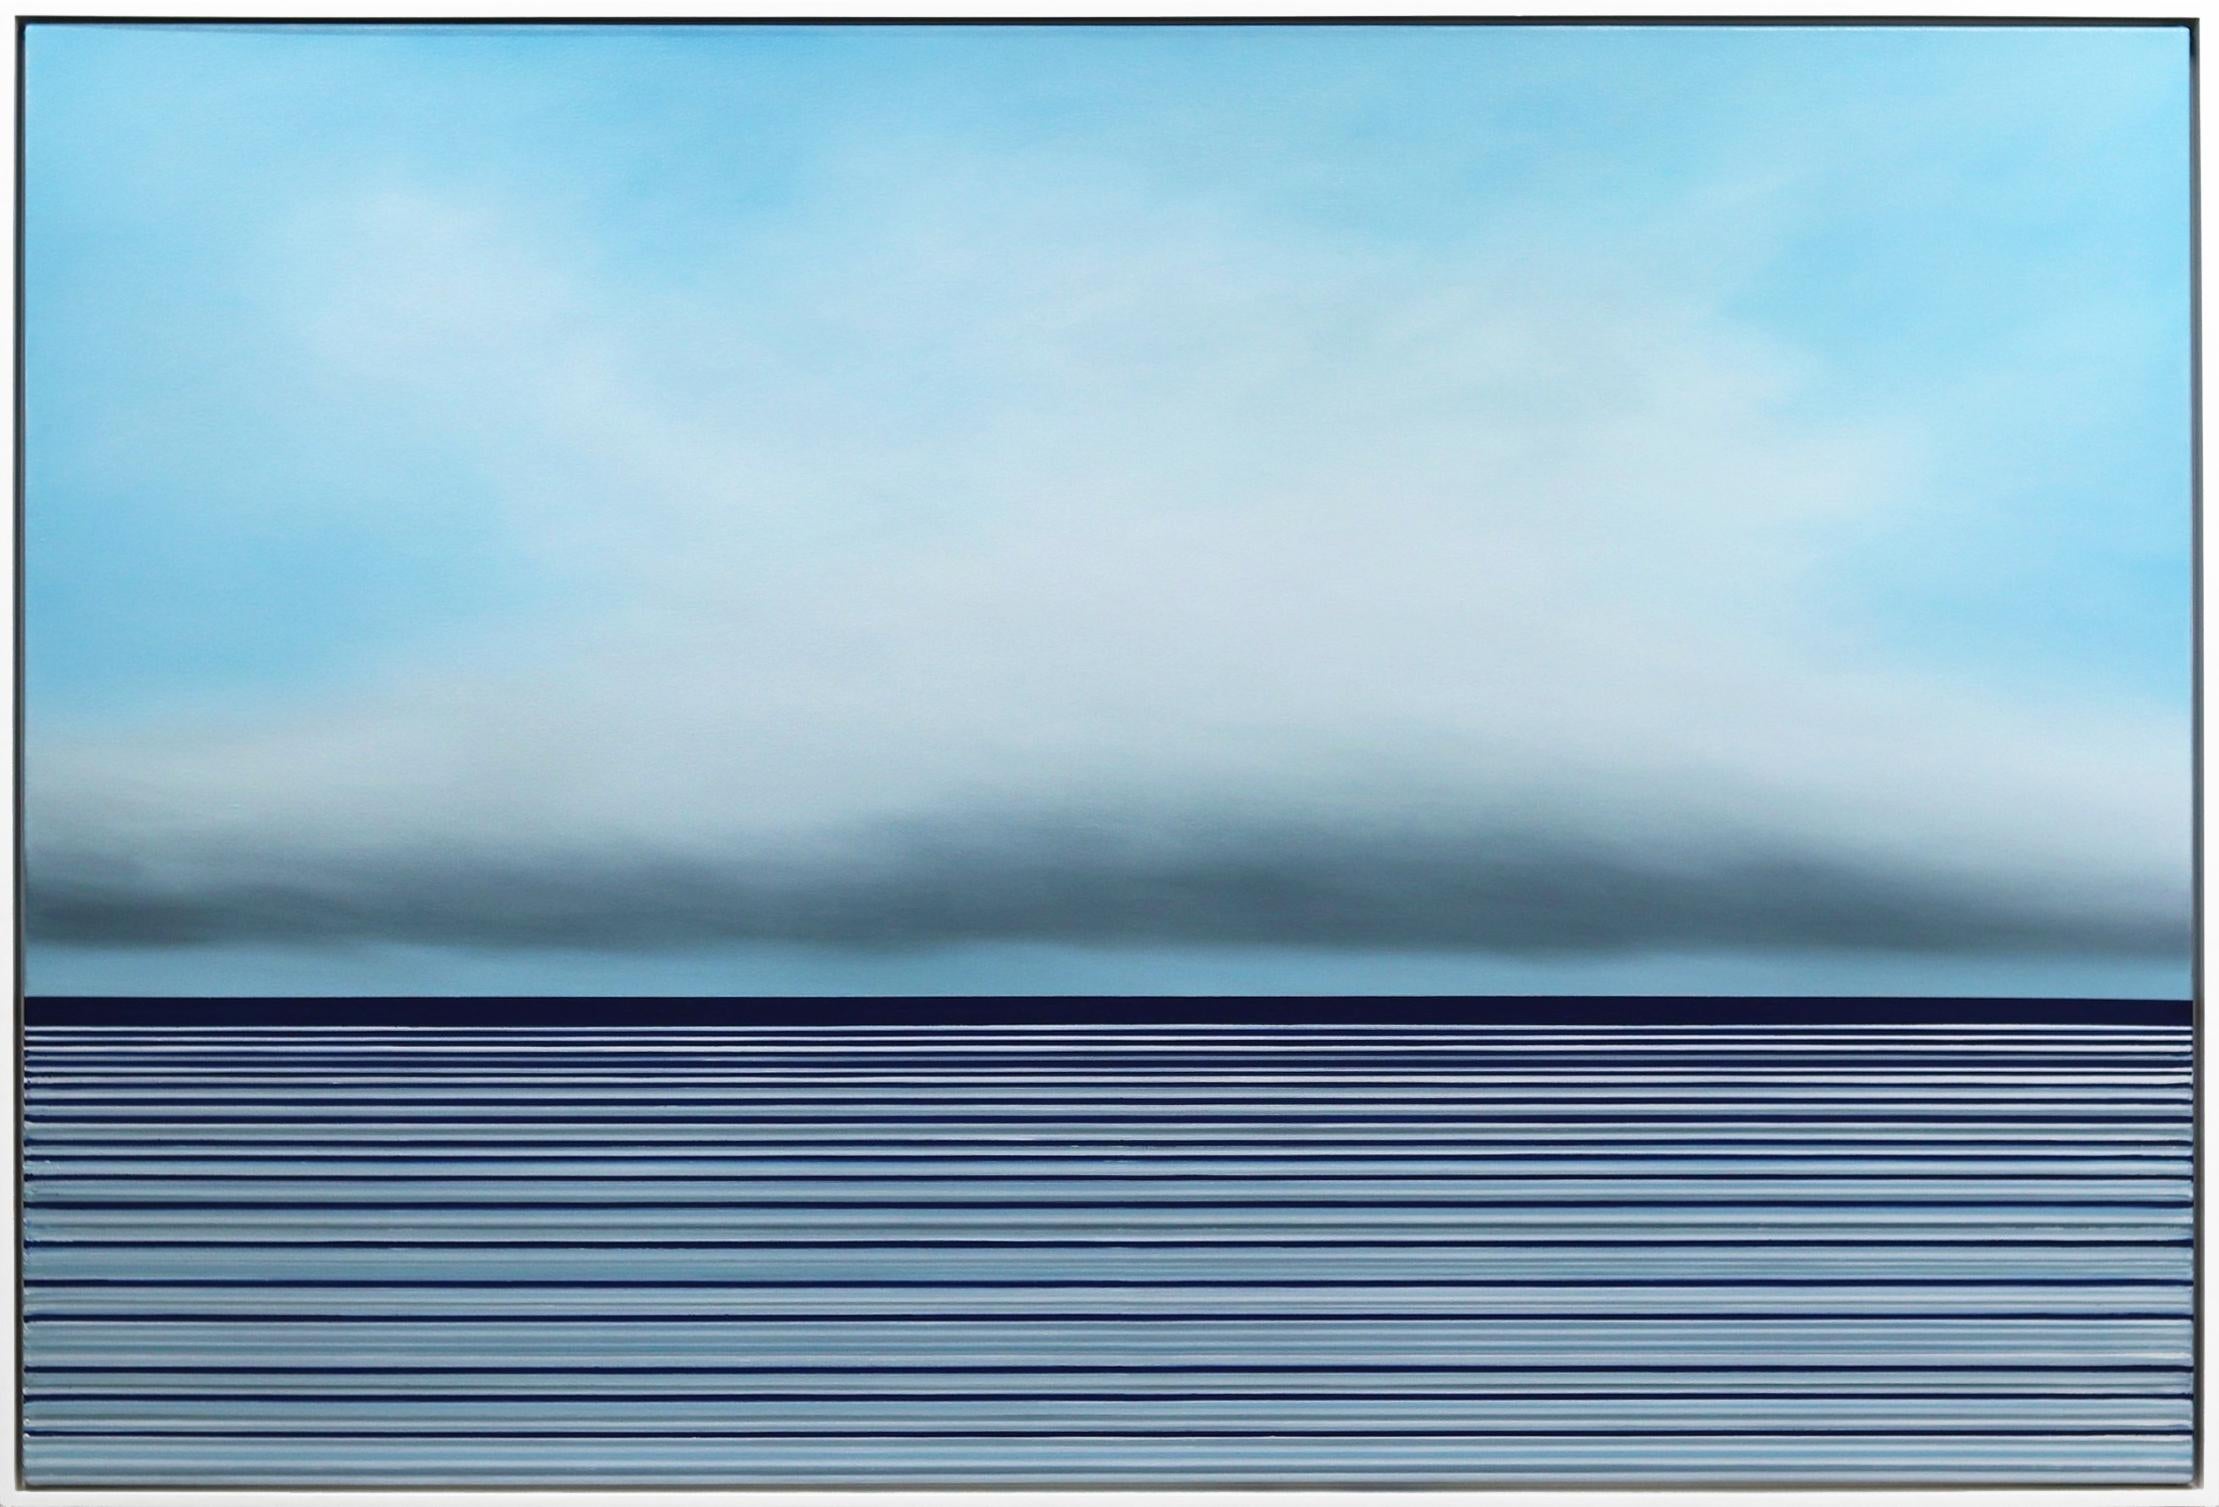 Untitled No. 733 - Large Framed Contemporary Minimalist Blue Artwork